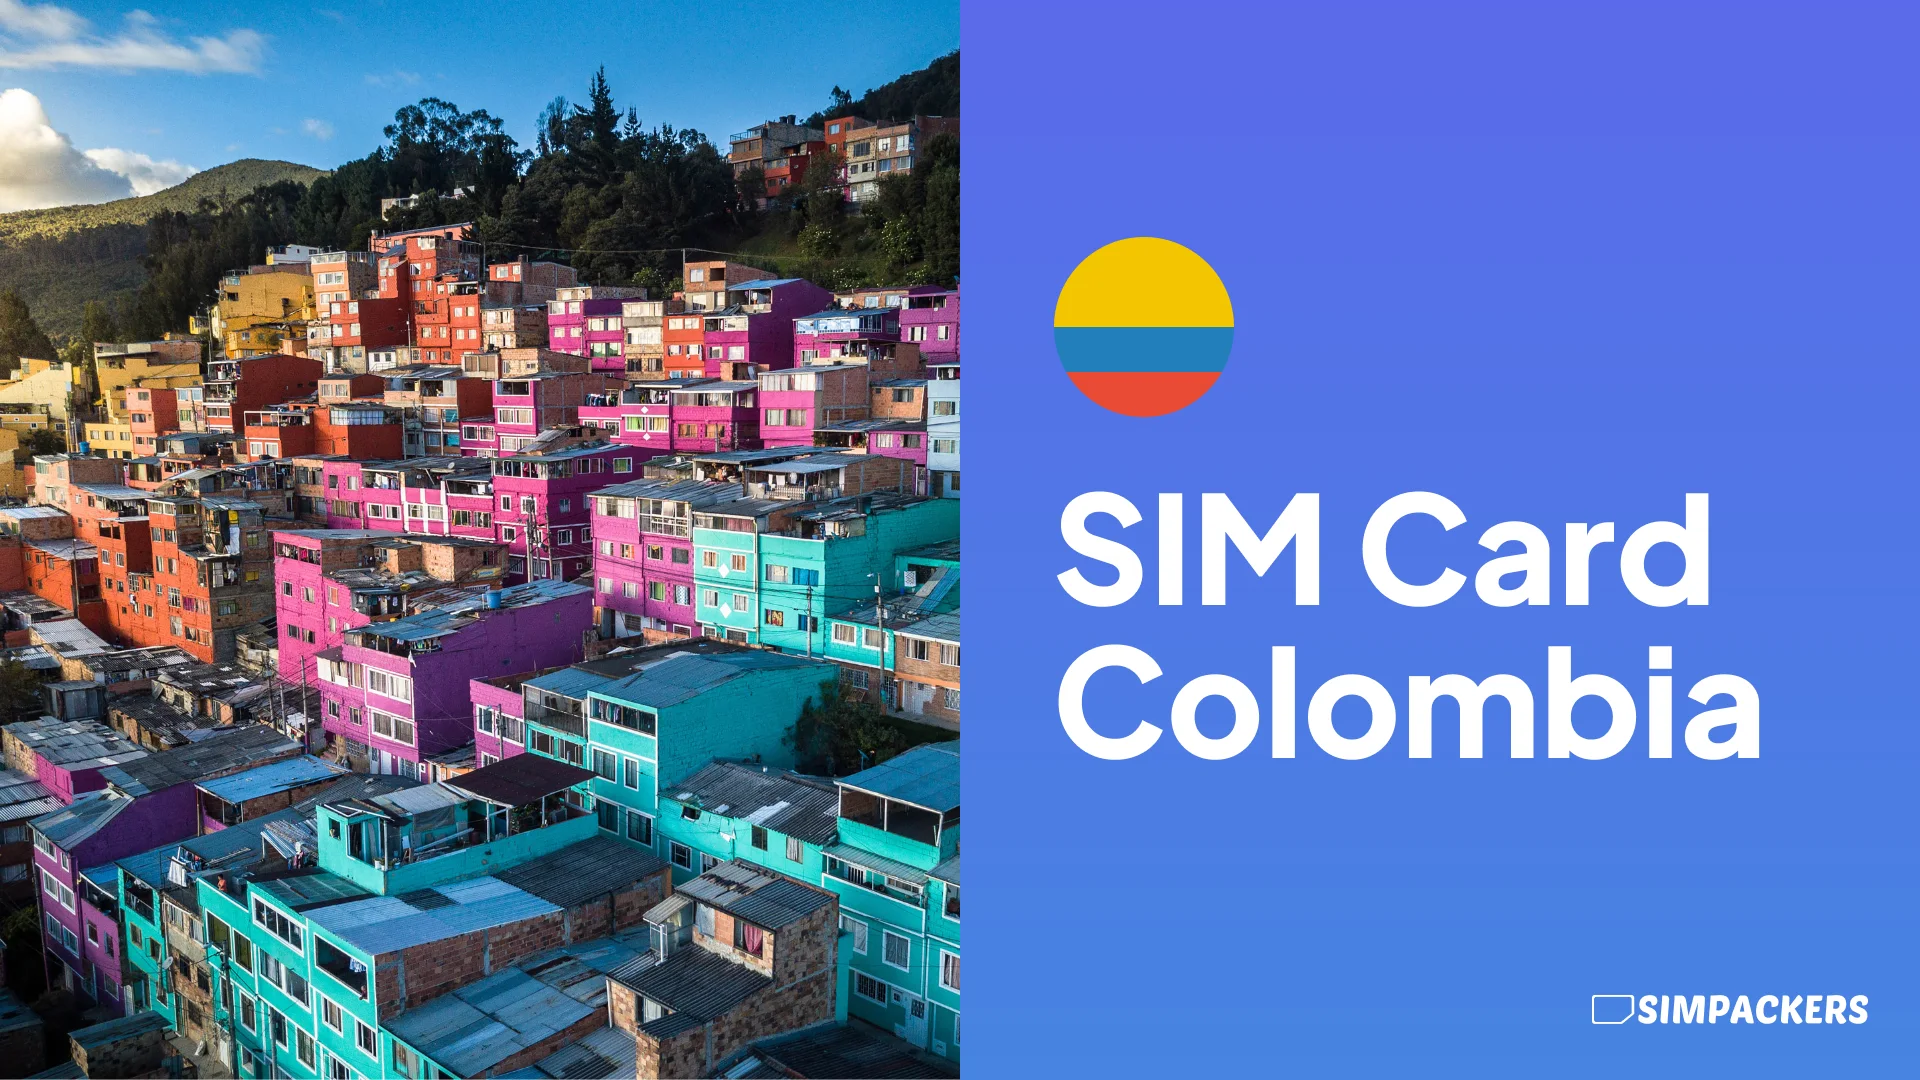 EN/FEATURED_IMAGES/sim-card-colombia.webp